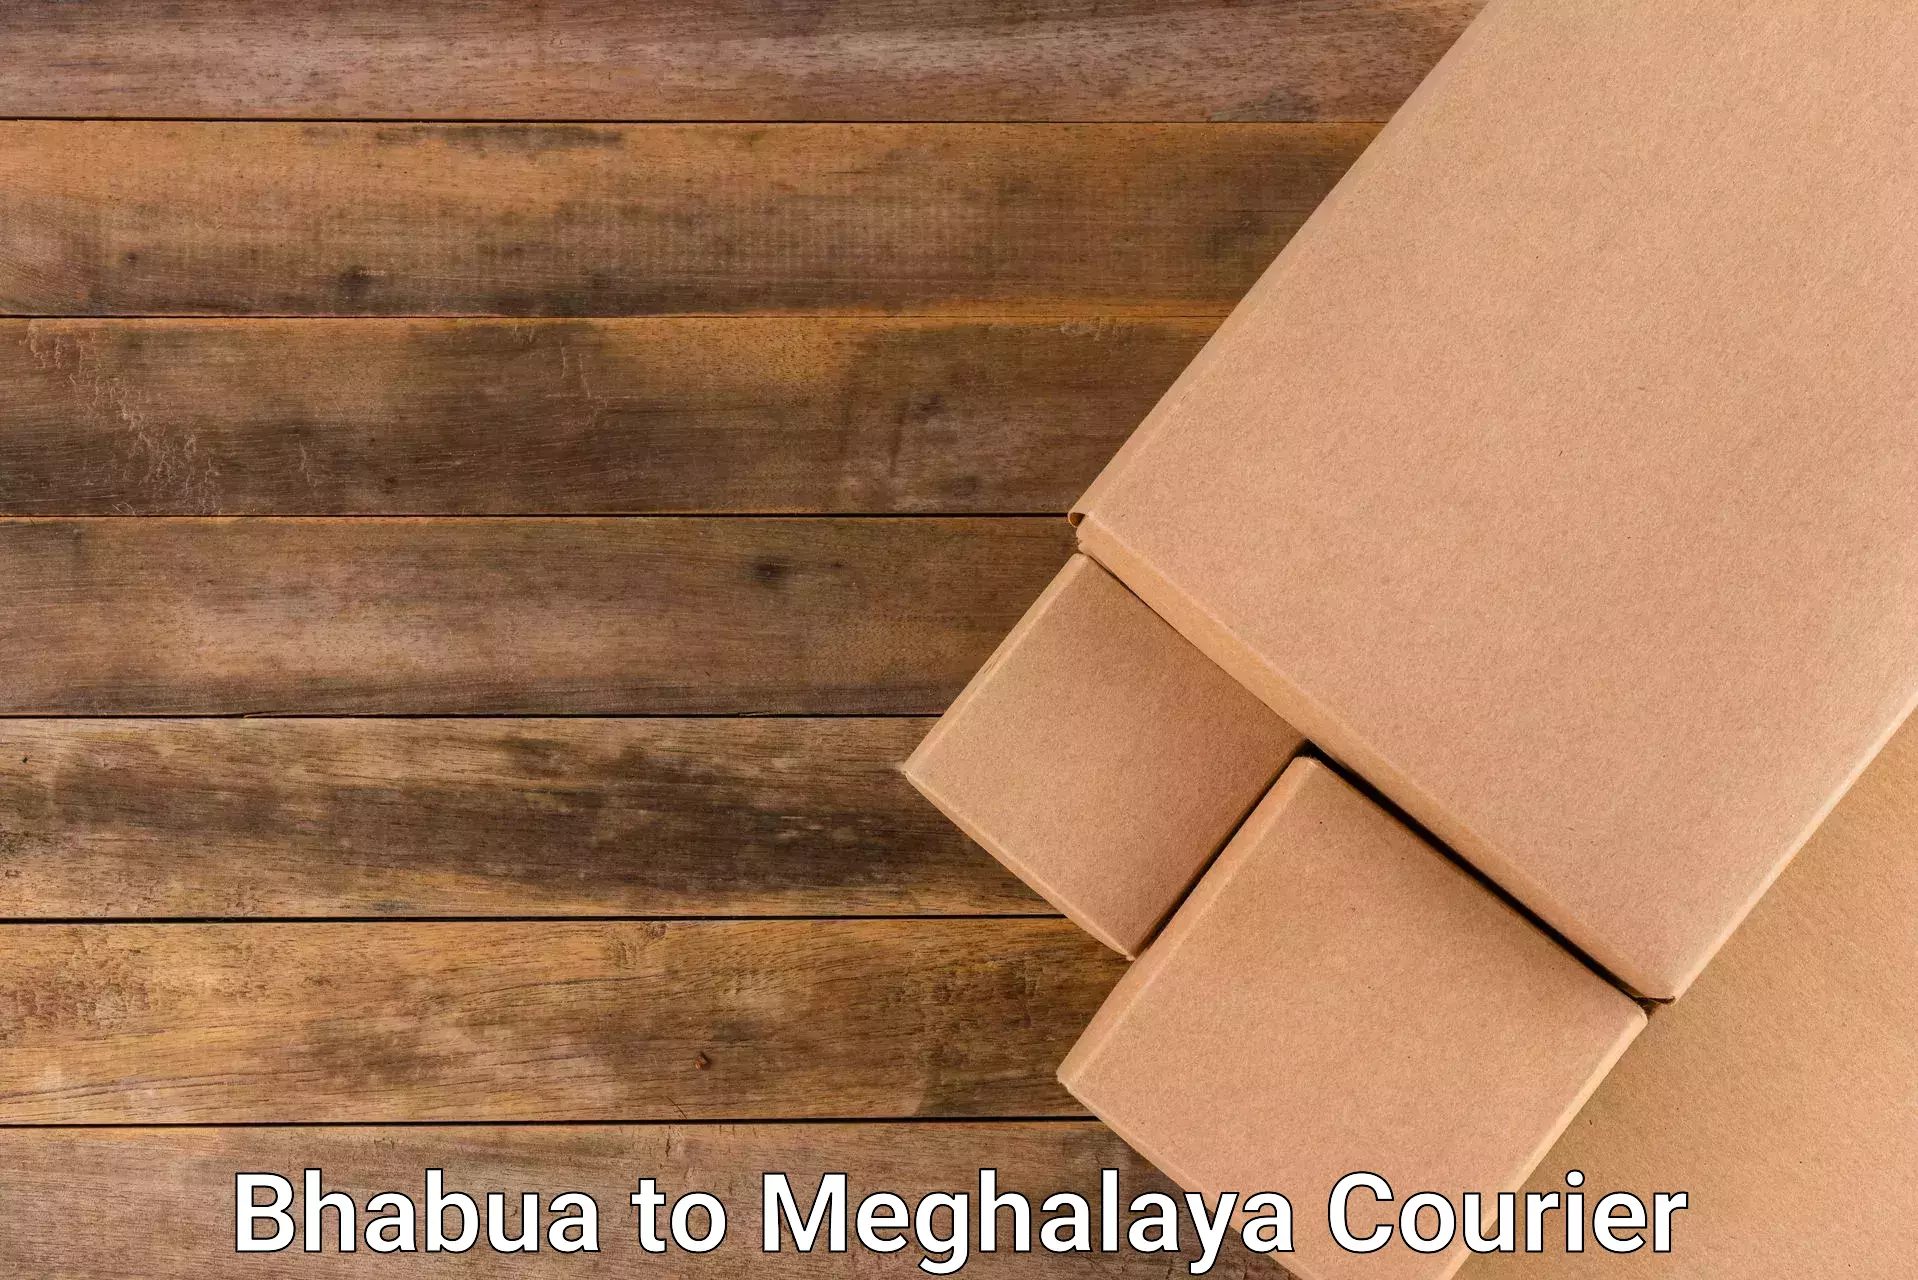 High-performance logistics Bhabua to Meghalaya